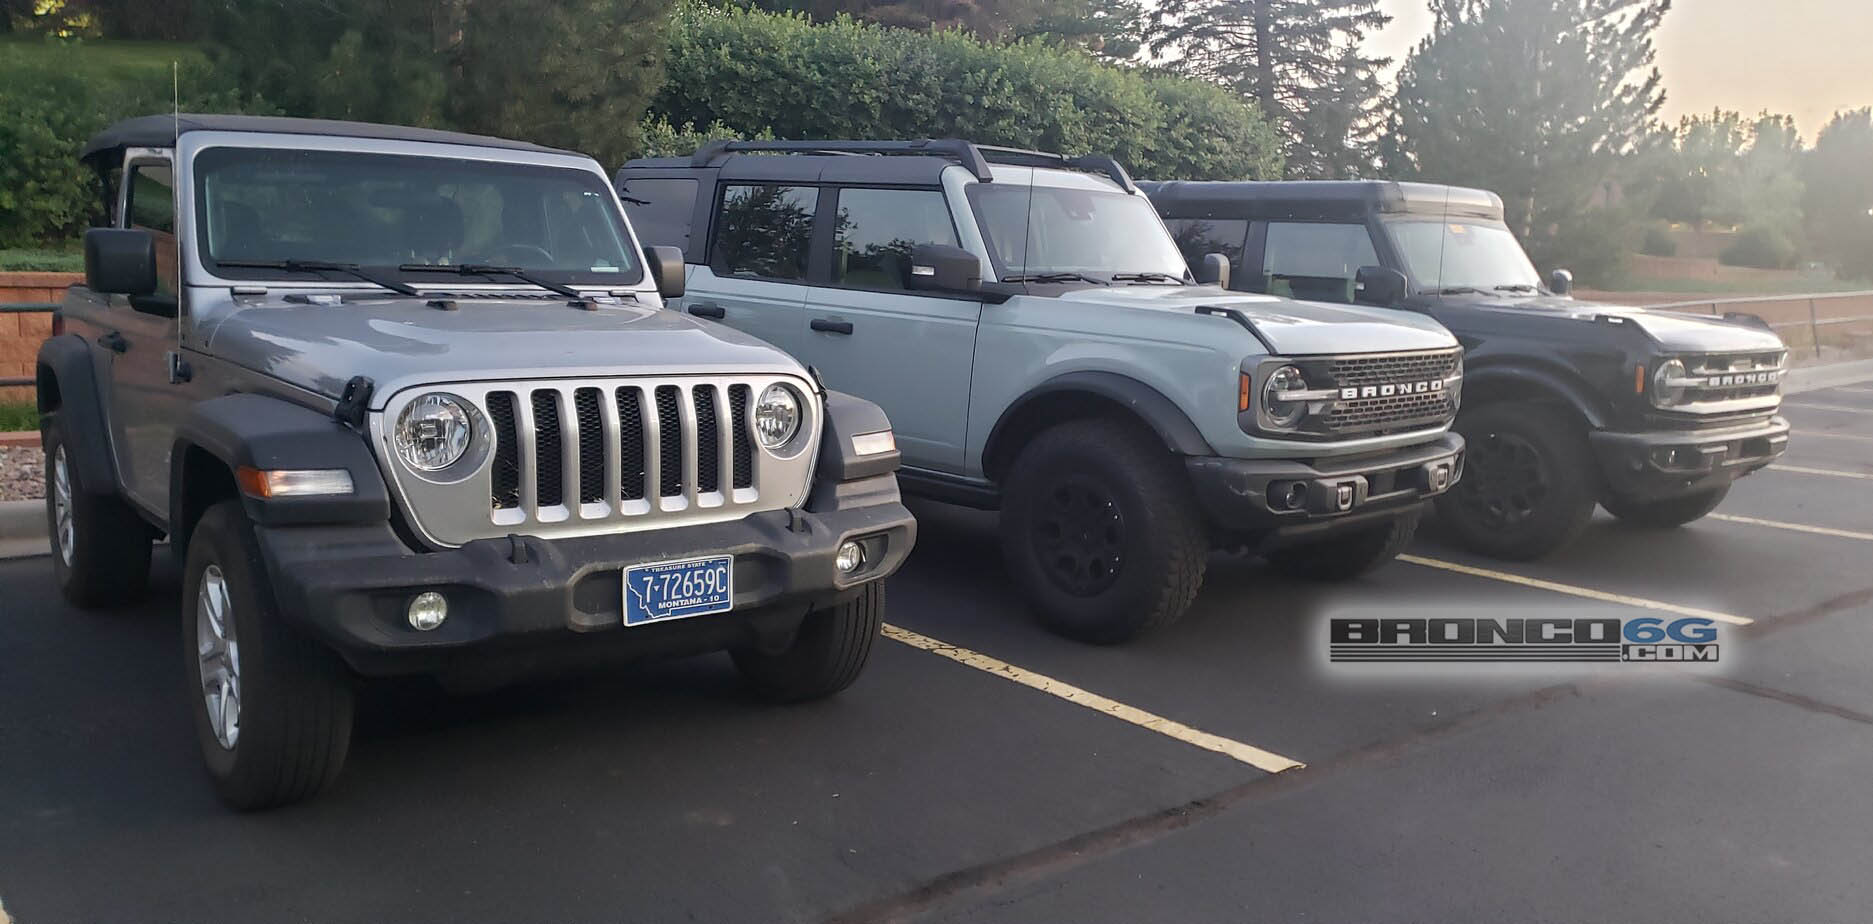 nco-vs-jeep-wrangler-comparison-side-by-side-3-jpg.jpg